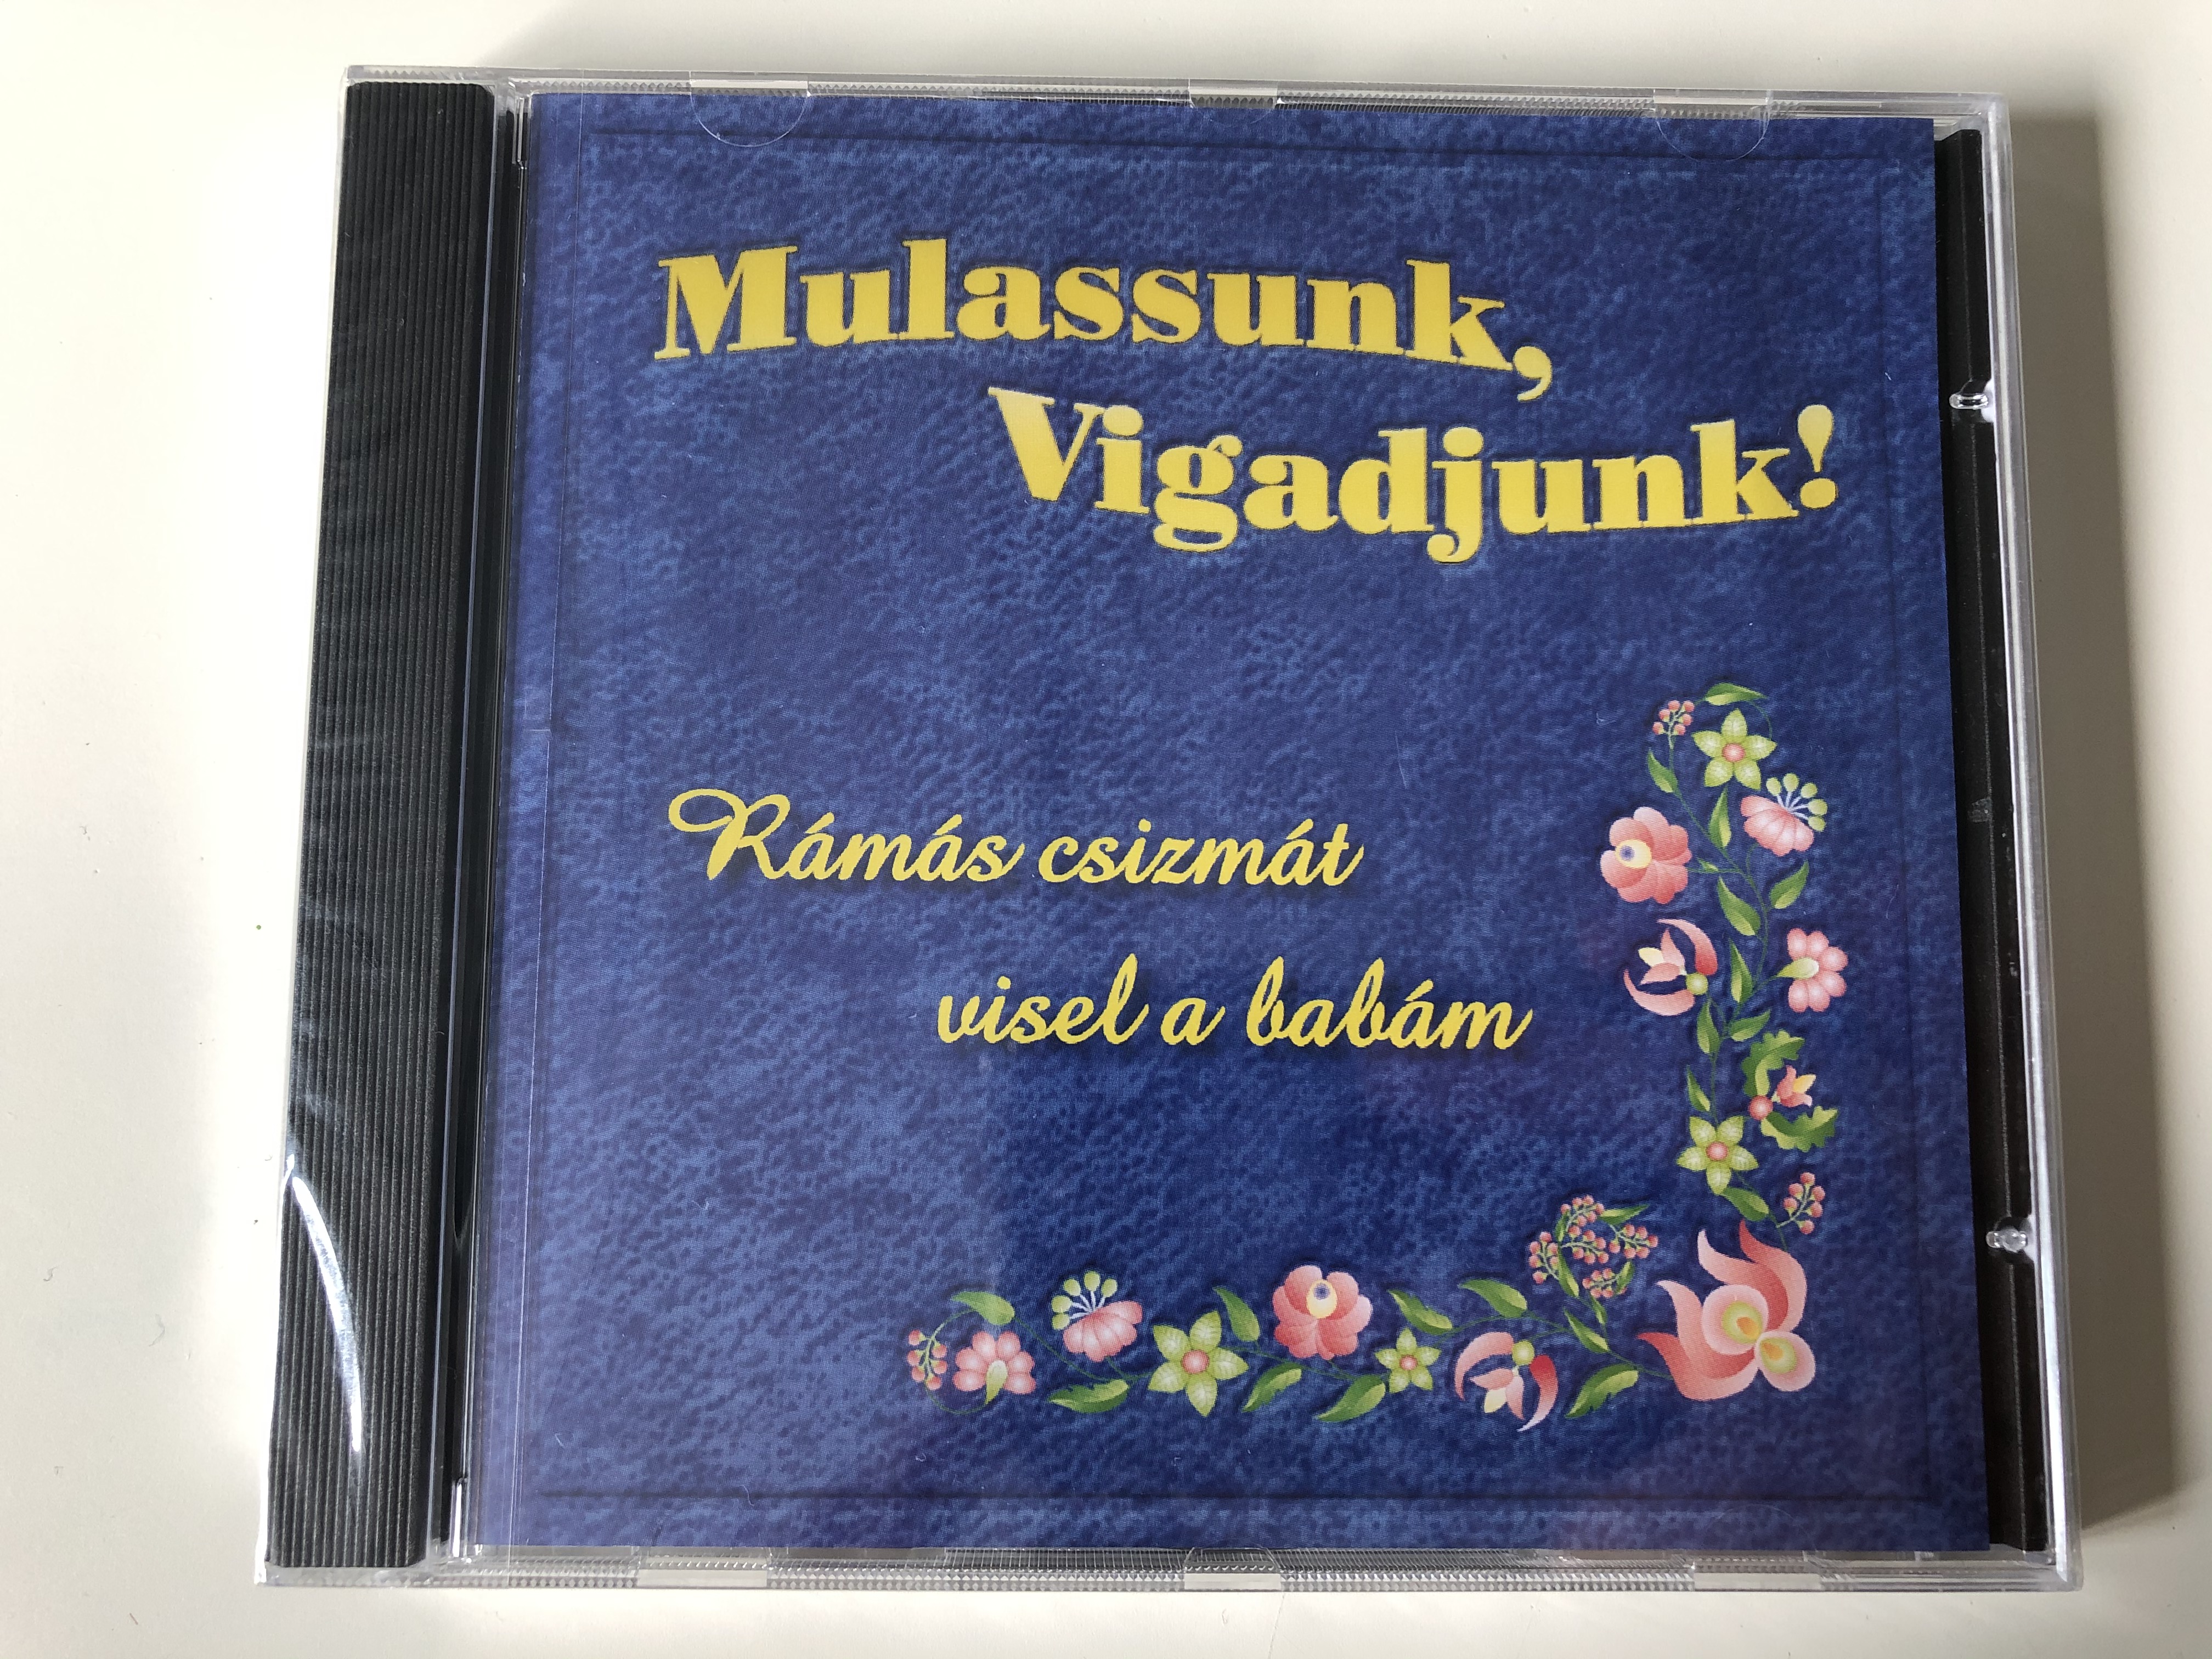 mulassunk-vigadjunk-ramas-csizmat-visel-a-babam-musicdome-kft-audio-cd-2005-5998175162218-1-.jpg